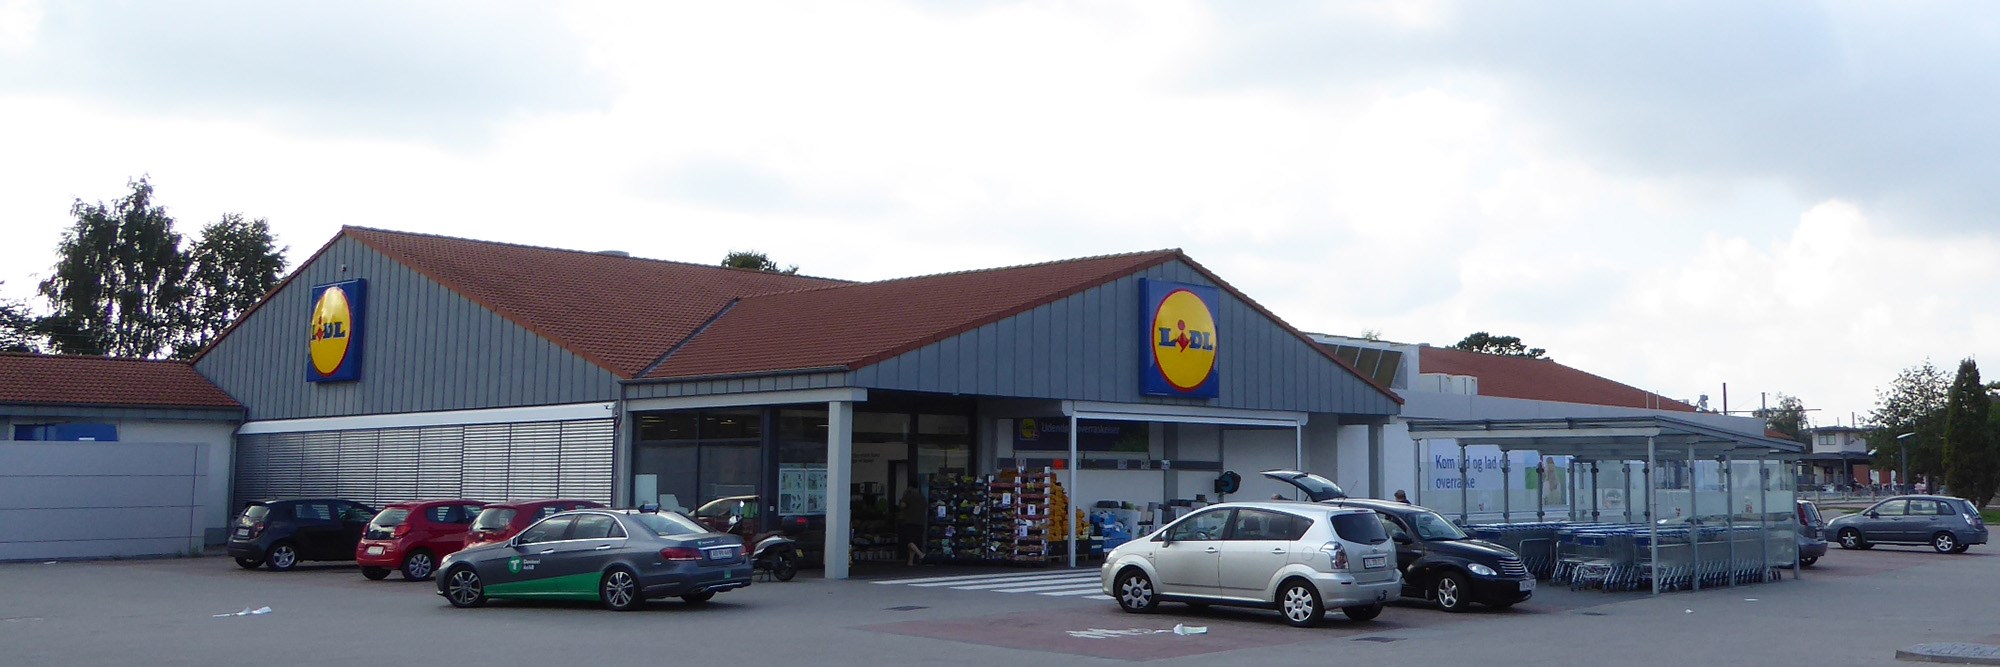 Lidl Store. Photo: Wikimedia Commons